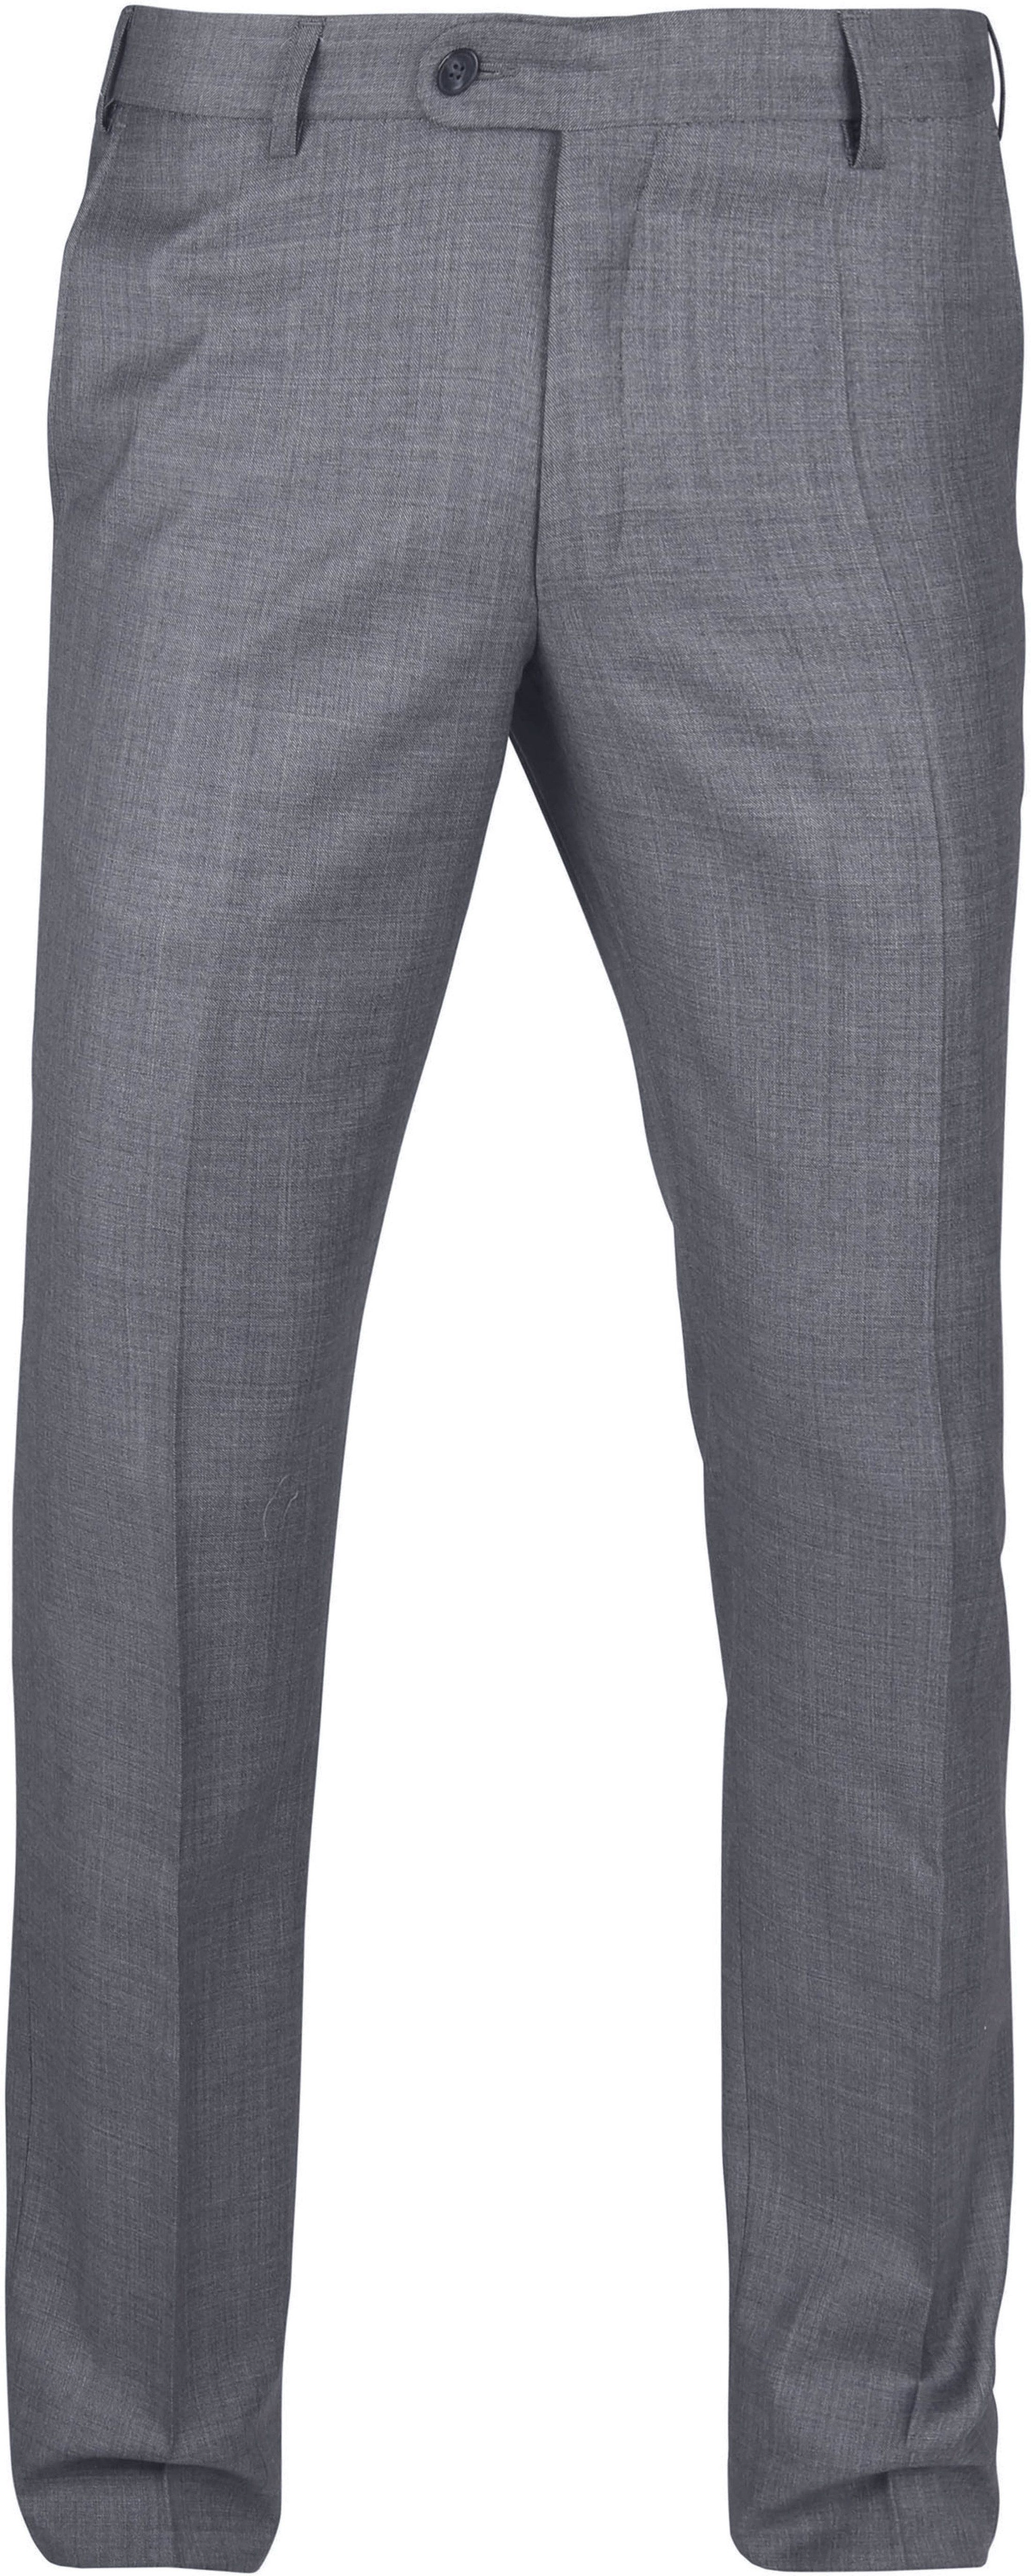 Suitable Pantalon Evans Dark Dark Grey Grey size W 30/31